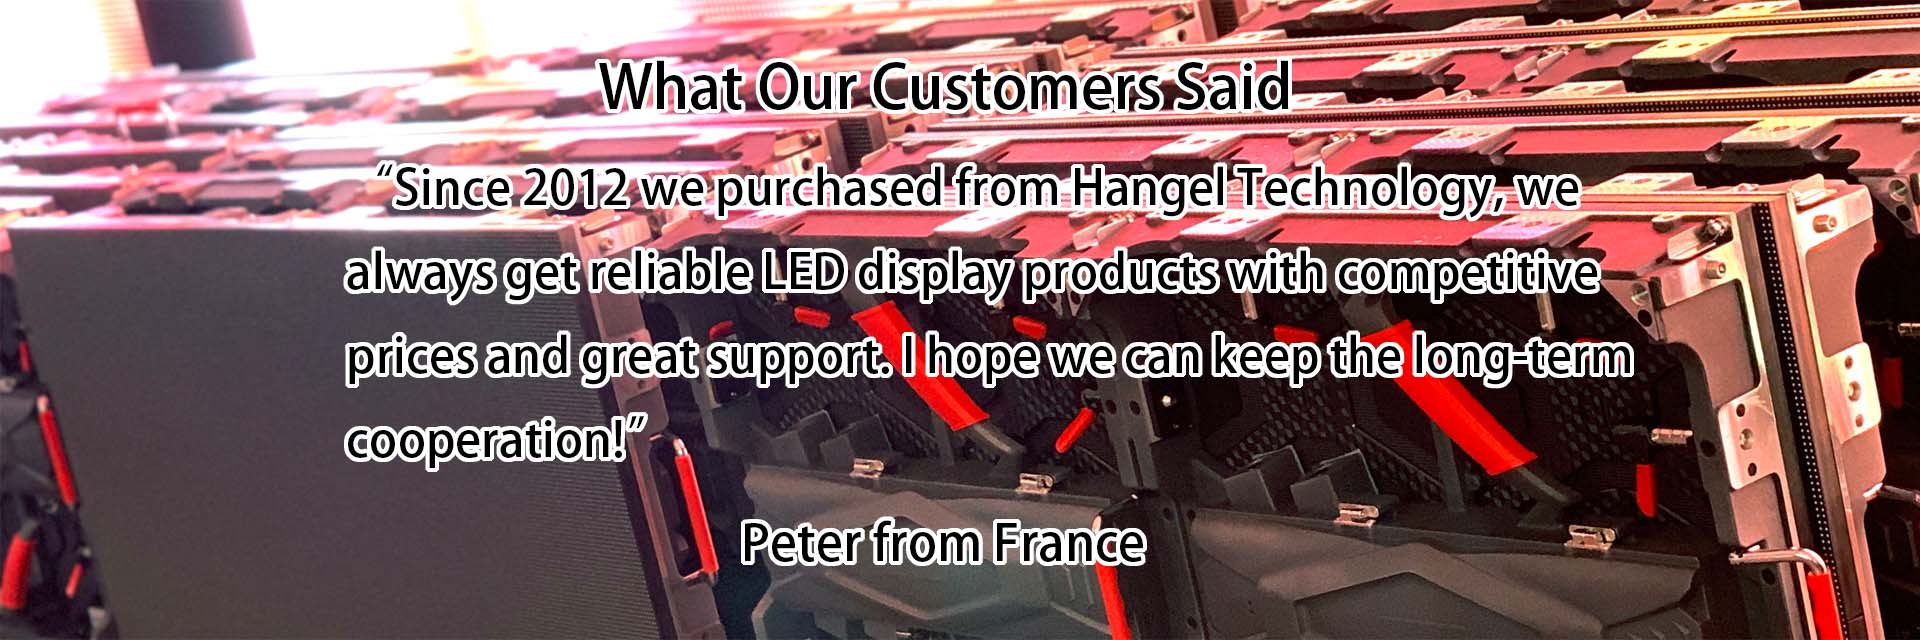 Hangel LED screen customer comment